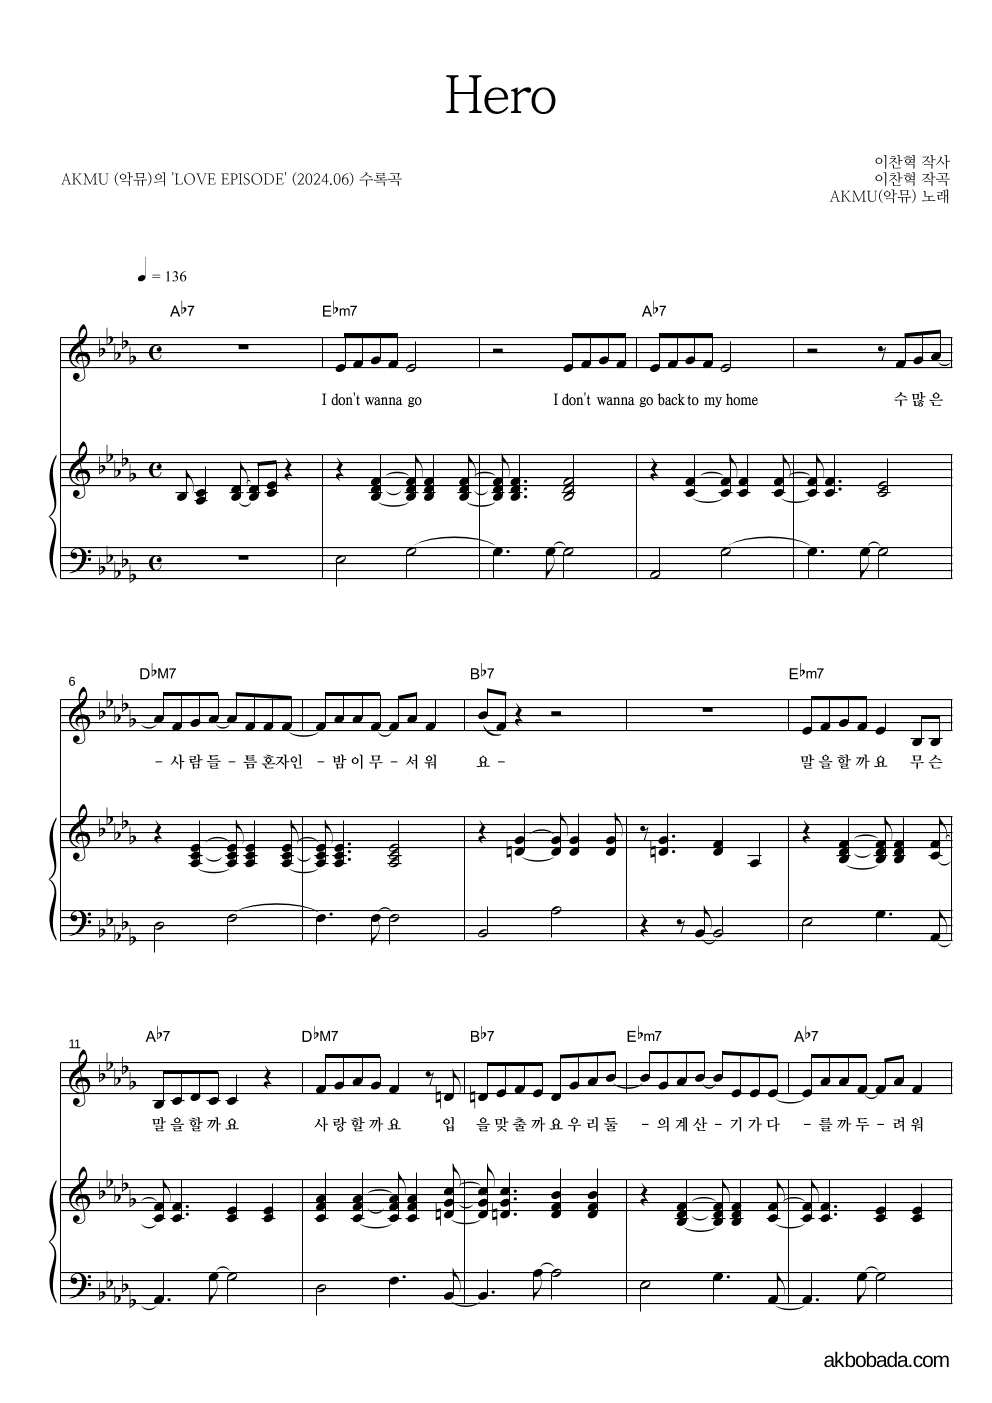 AKMU(악뮤) - Hero 피아노 3단 악보 